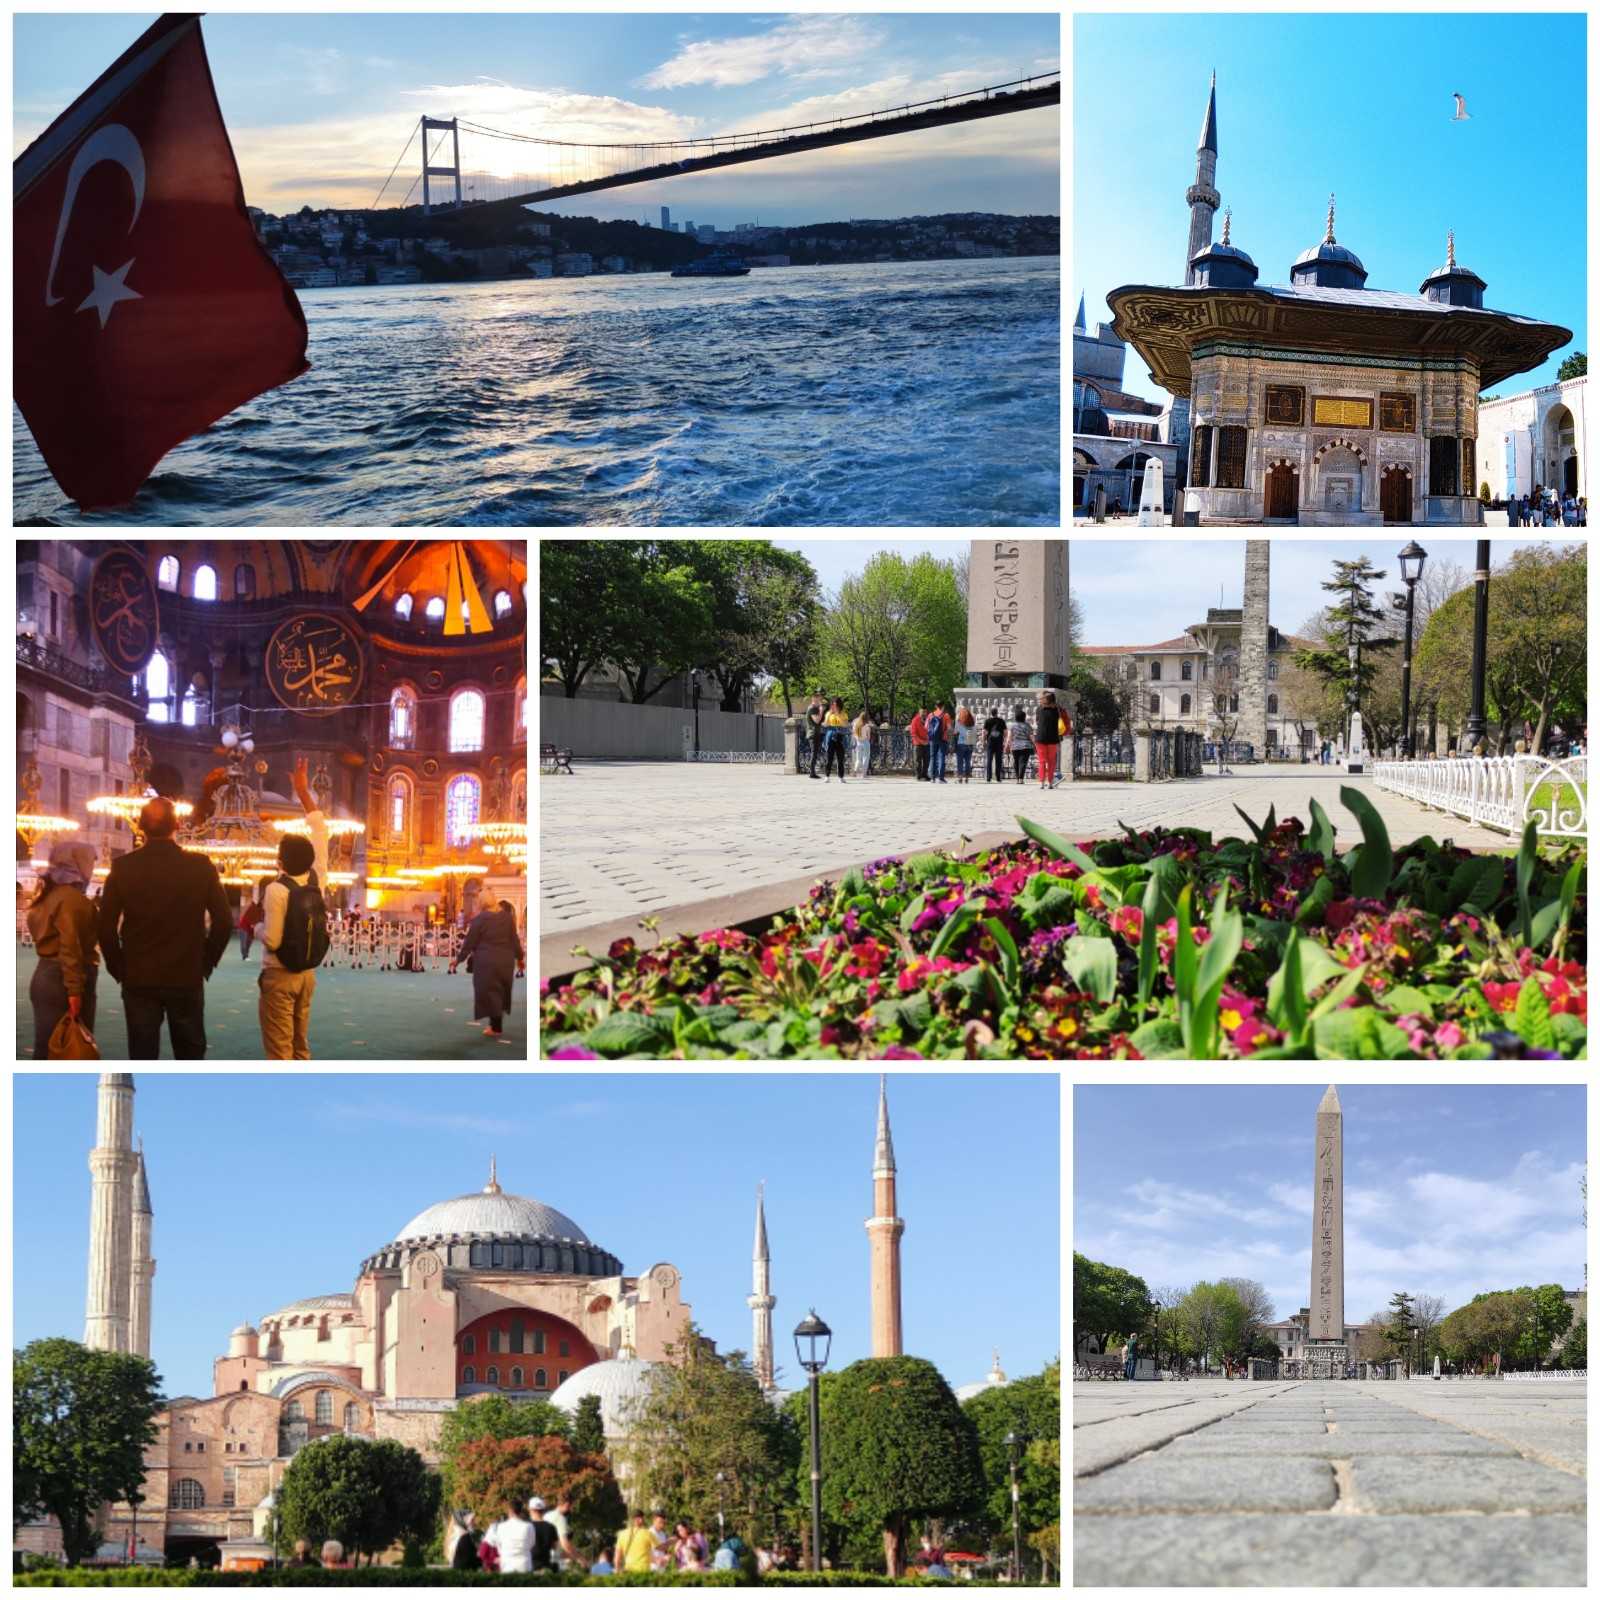 Стамбул старый город султанахмет. Стамбул набережная Босфора. Стамбул достопримечательности Босфор. Стамбул Турция пролив Босфор достопримечательности. Стамбул Босфор экскурсия.